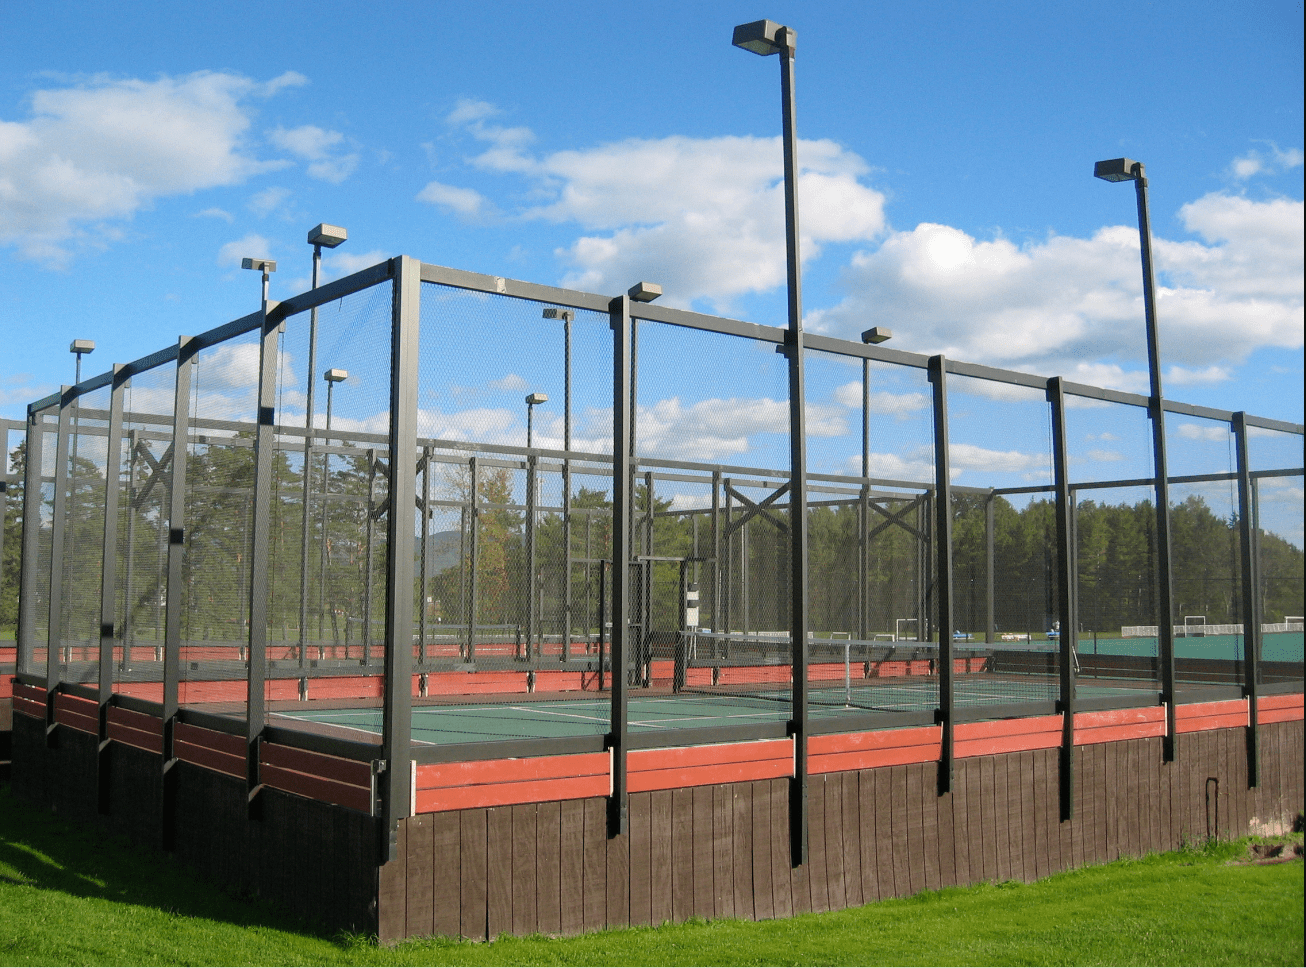 Paddle tennis court